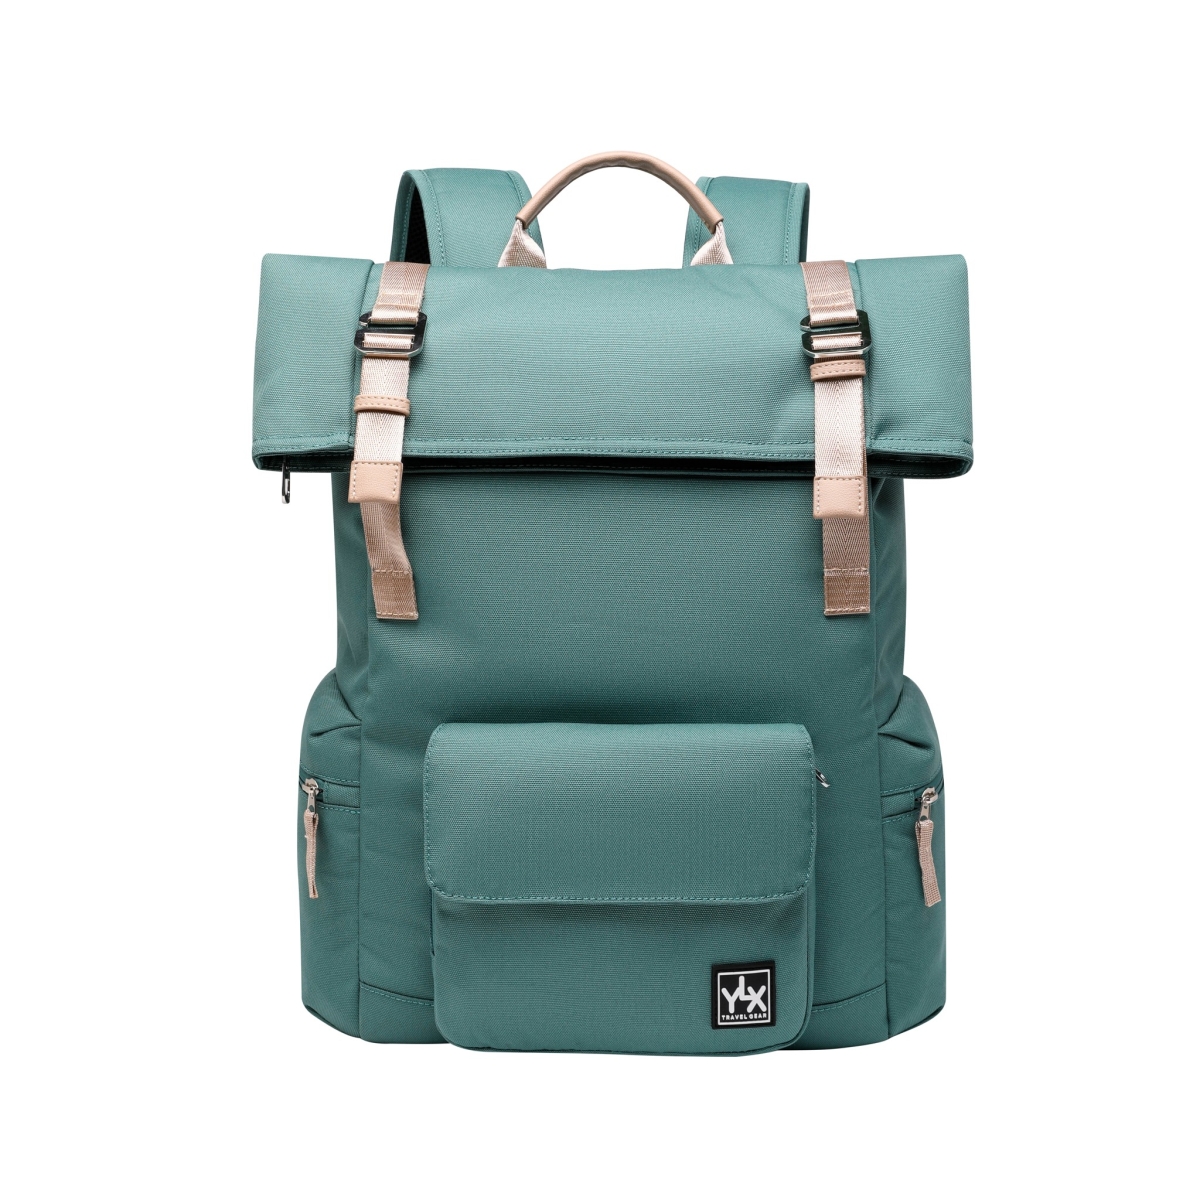 YLX Original Backpack 2.0 | Beryl Green